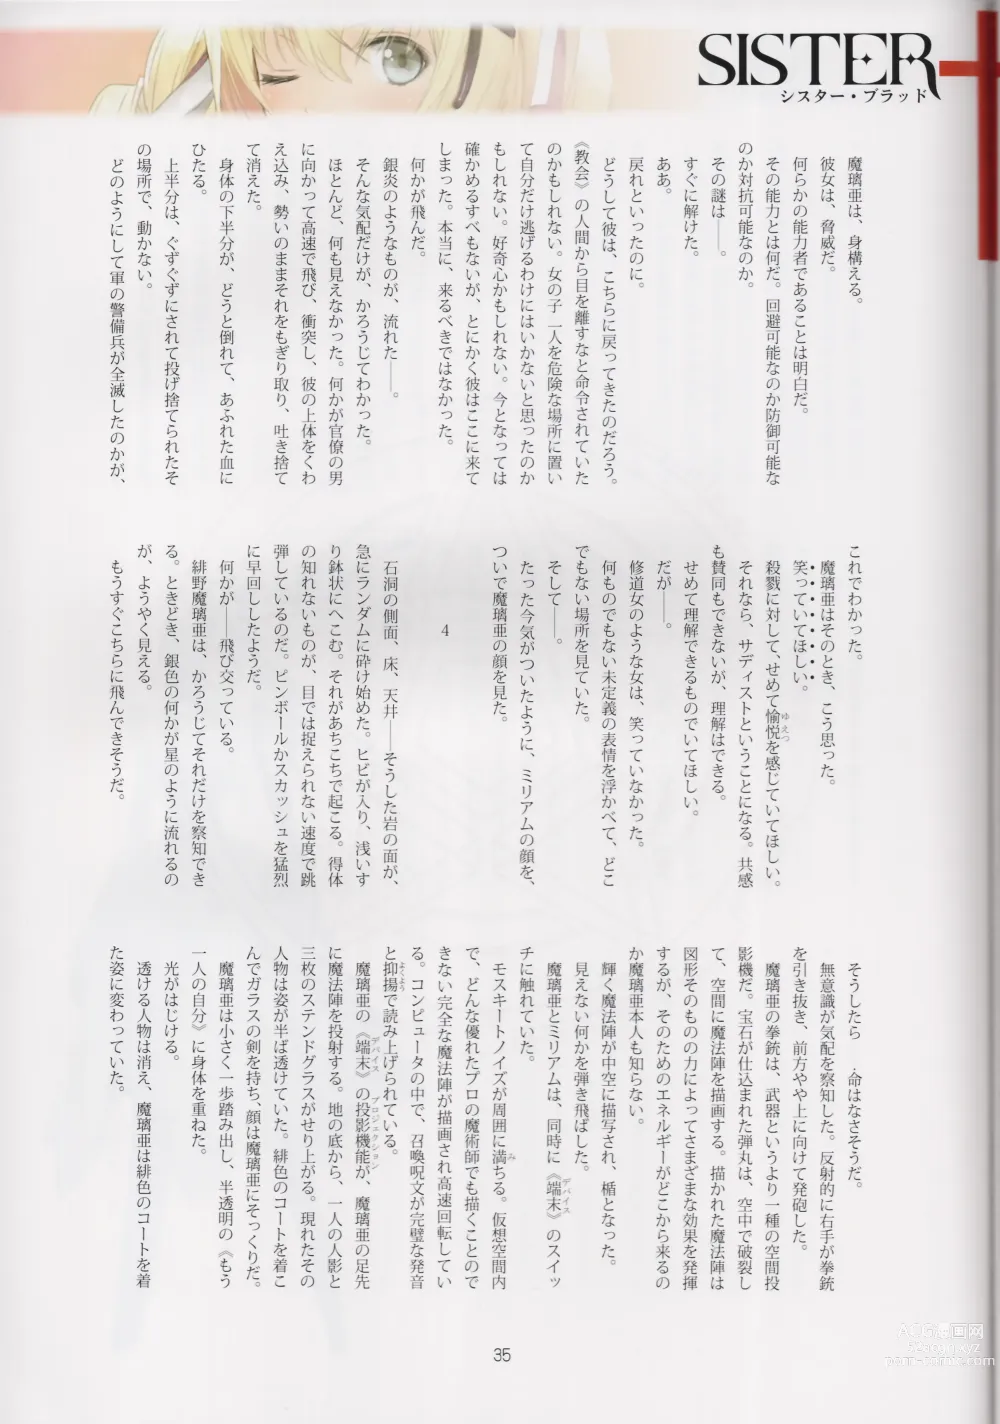 Page 35 of doujinshi Tony MAGAZINE 08